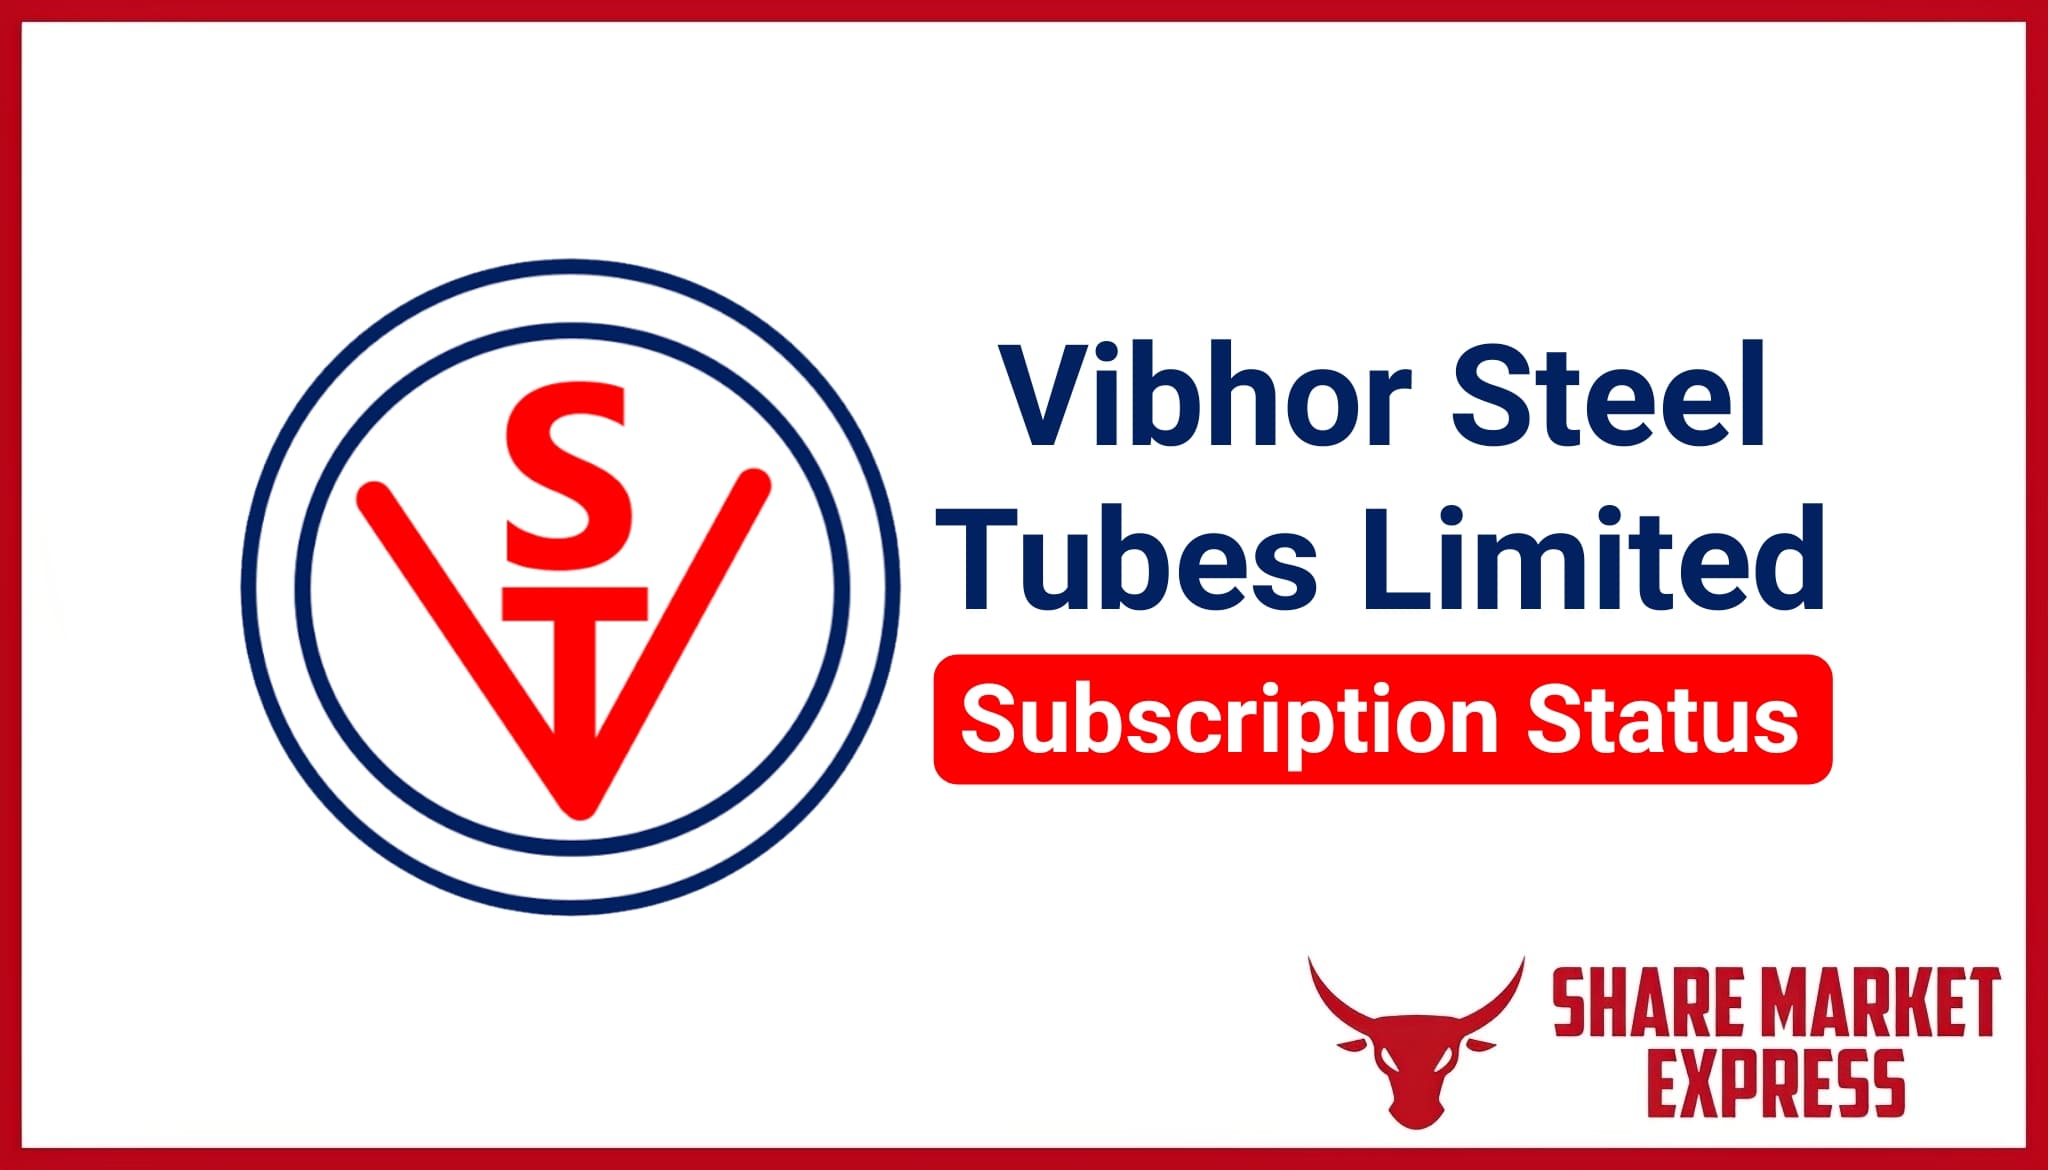 Vibhor Steel Tubes IPO Subscription Status - Vibhor Steel IPO Subscription Status